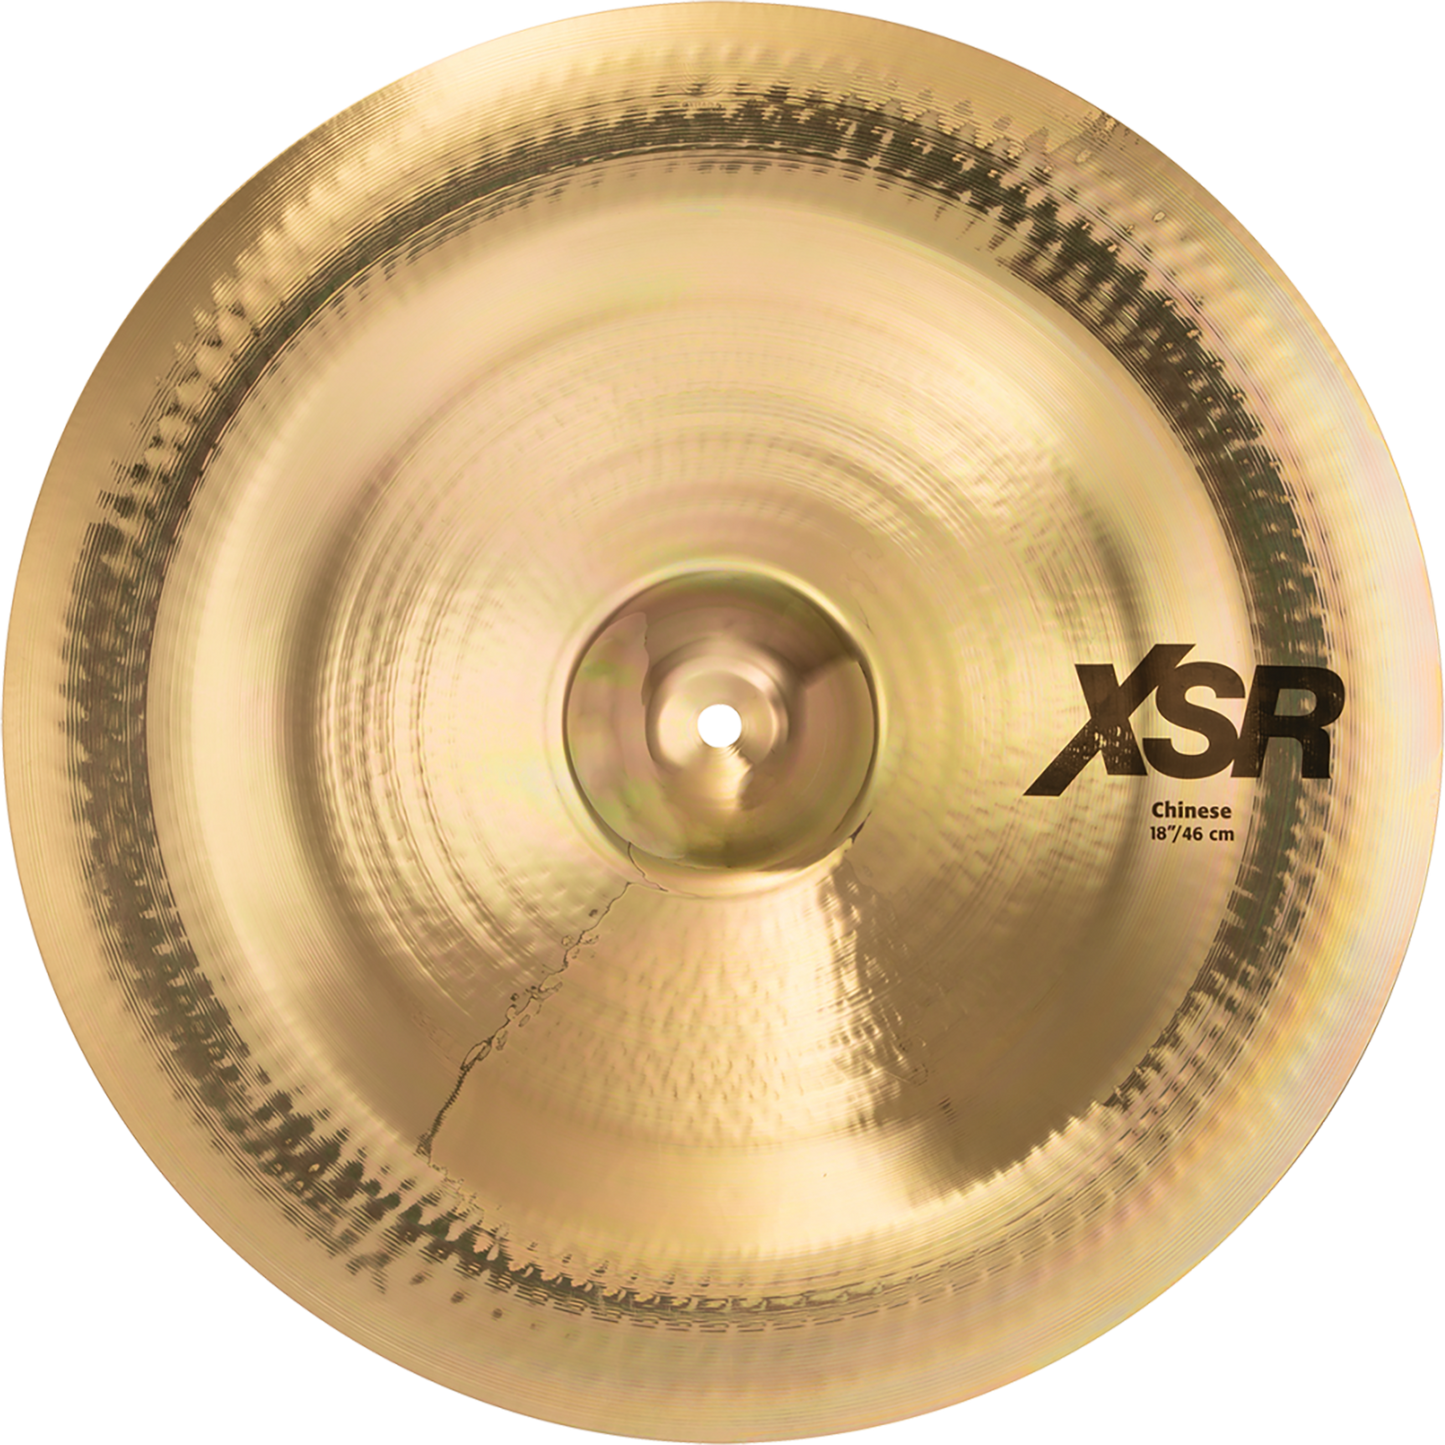 Sabian 18” XSR China Cymbal